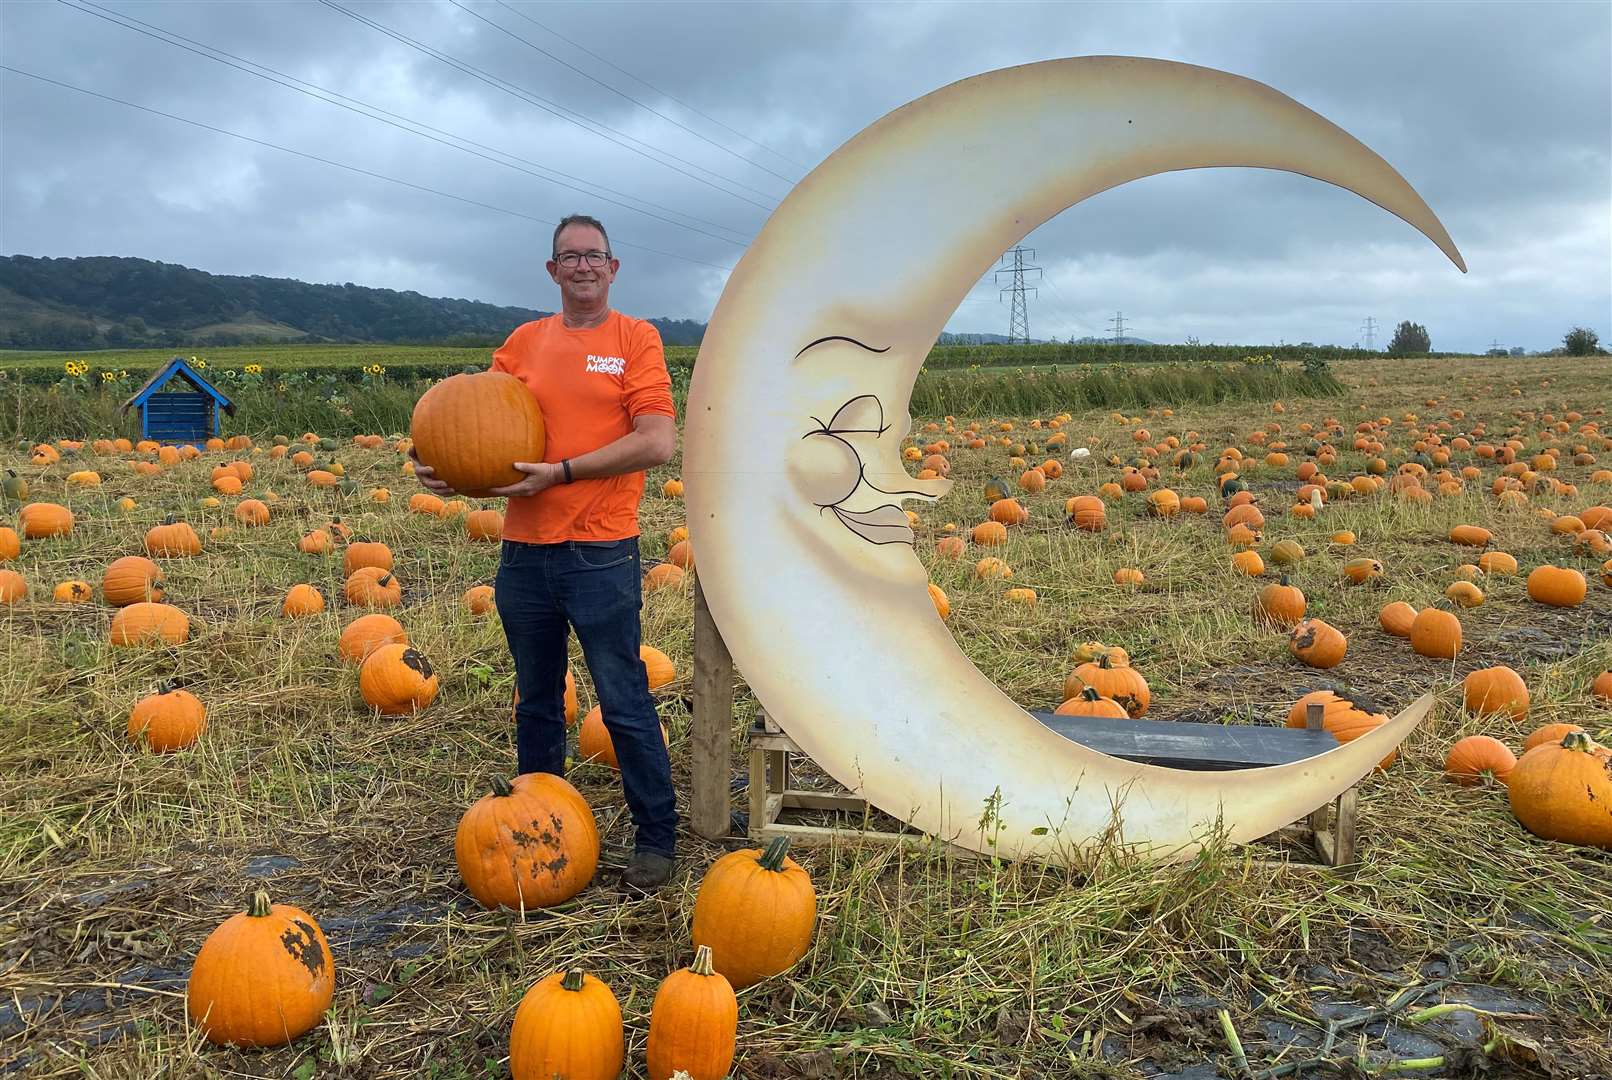 Charles Eckley, 57, has been running Pumpkin Moon since 2016